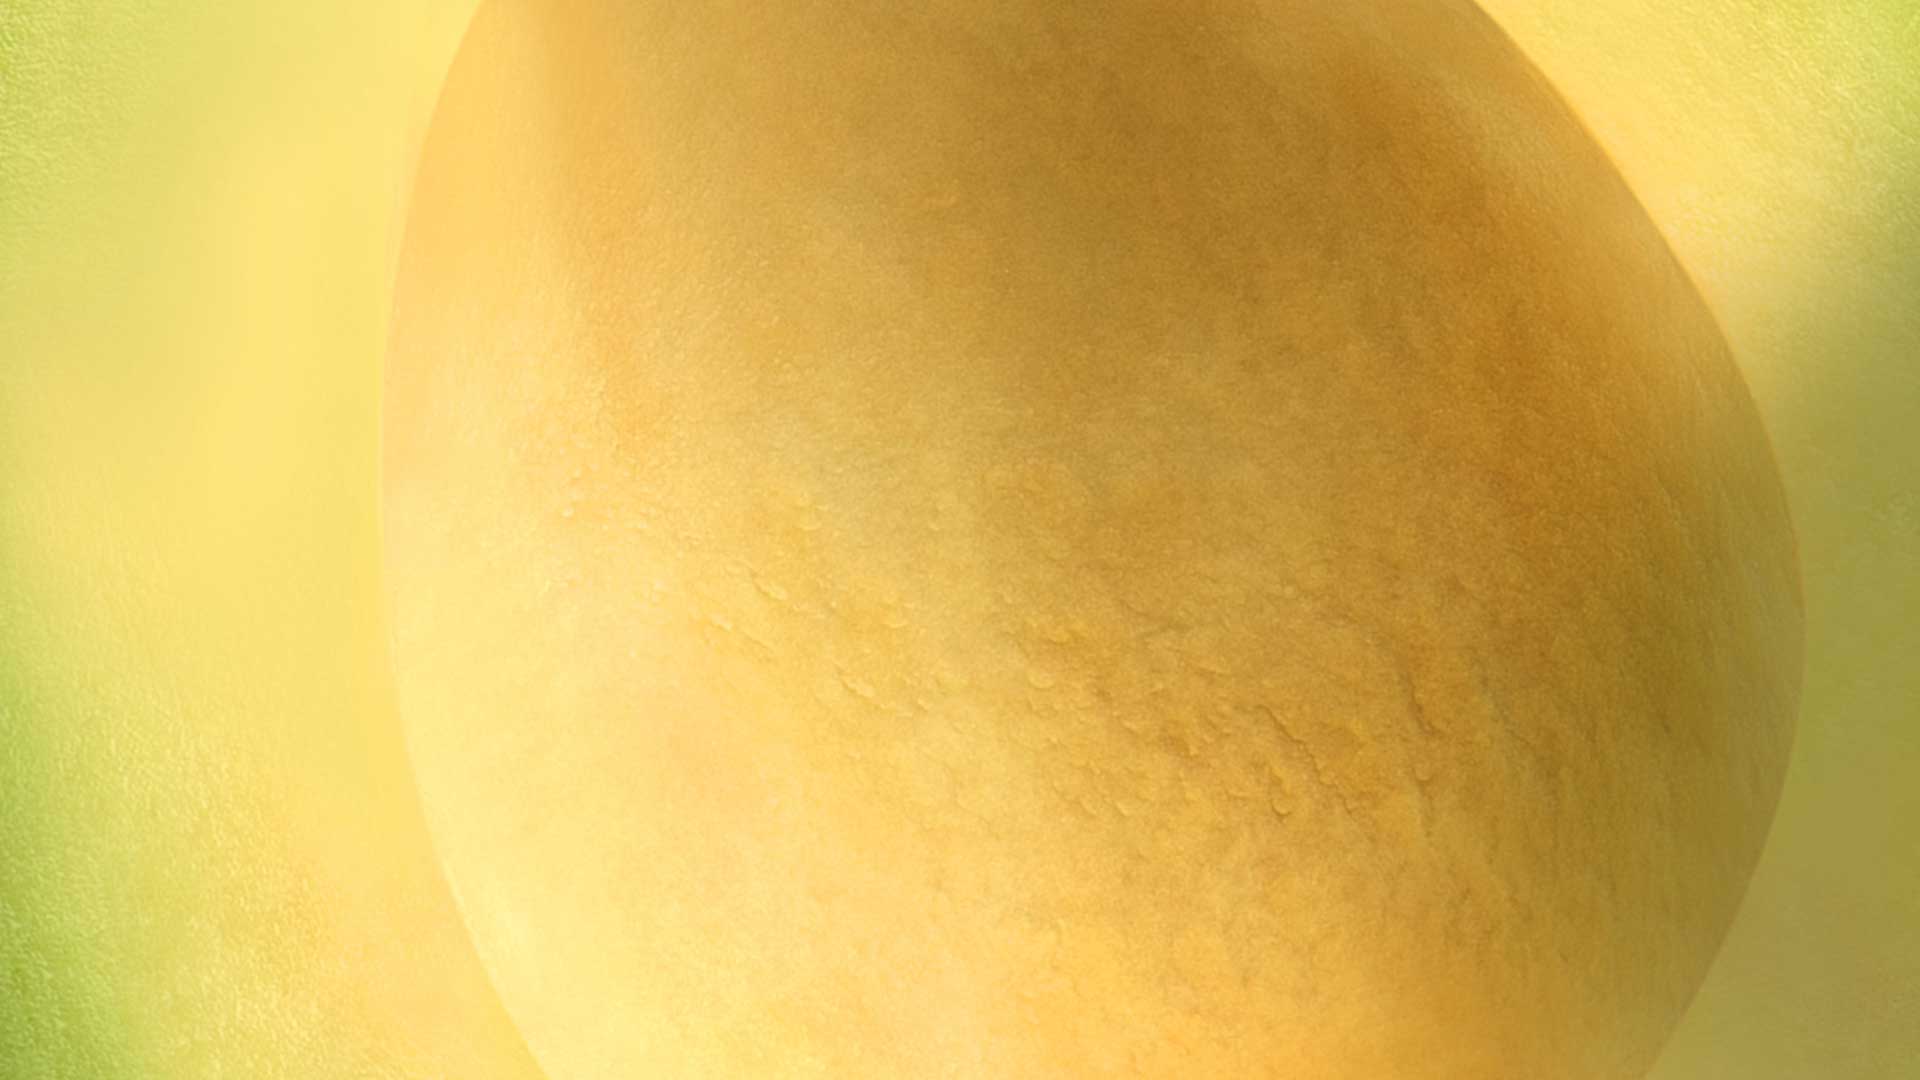 A close up of a fruit